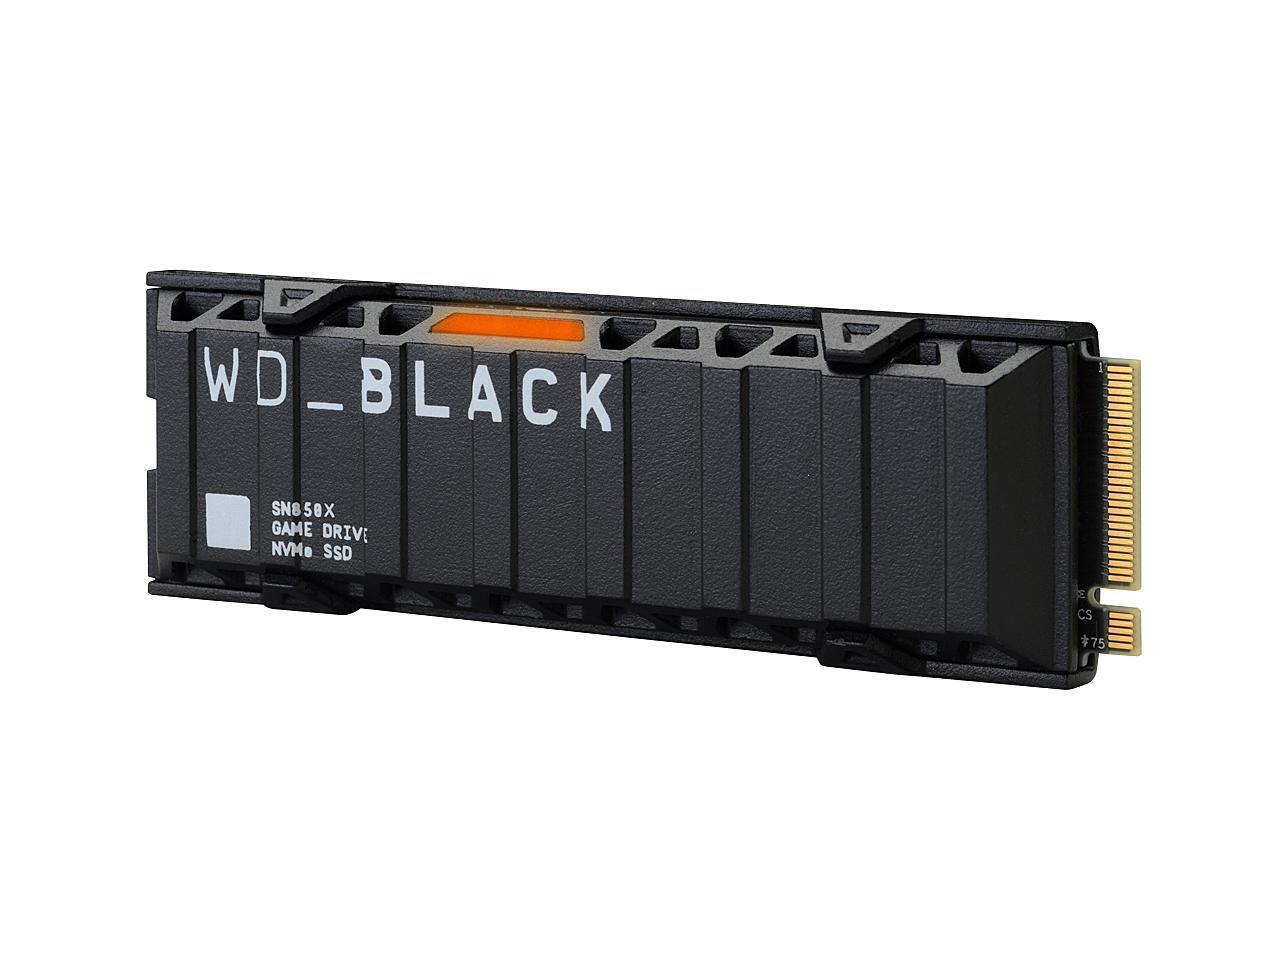 WD_BLACK SN850X NVMe M.2 2280 2TB PCI-Express 4.0 x4 Internal Solid State Drive